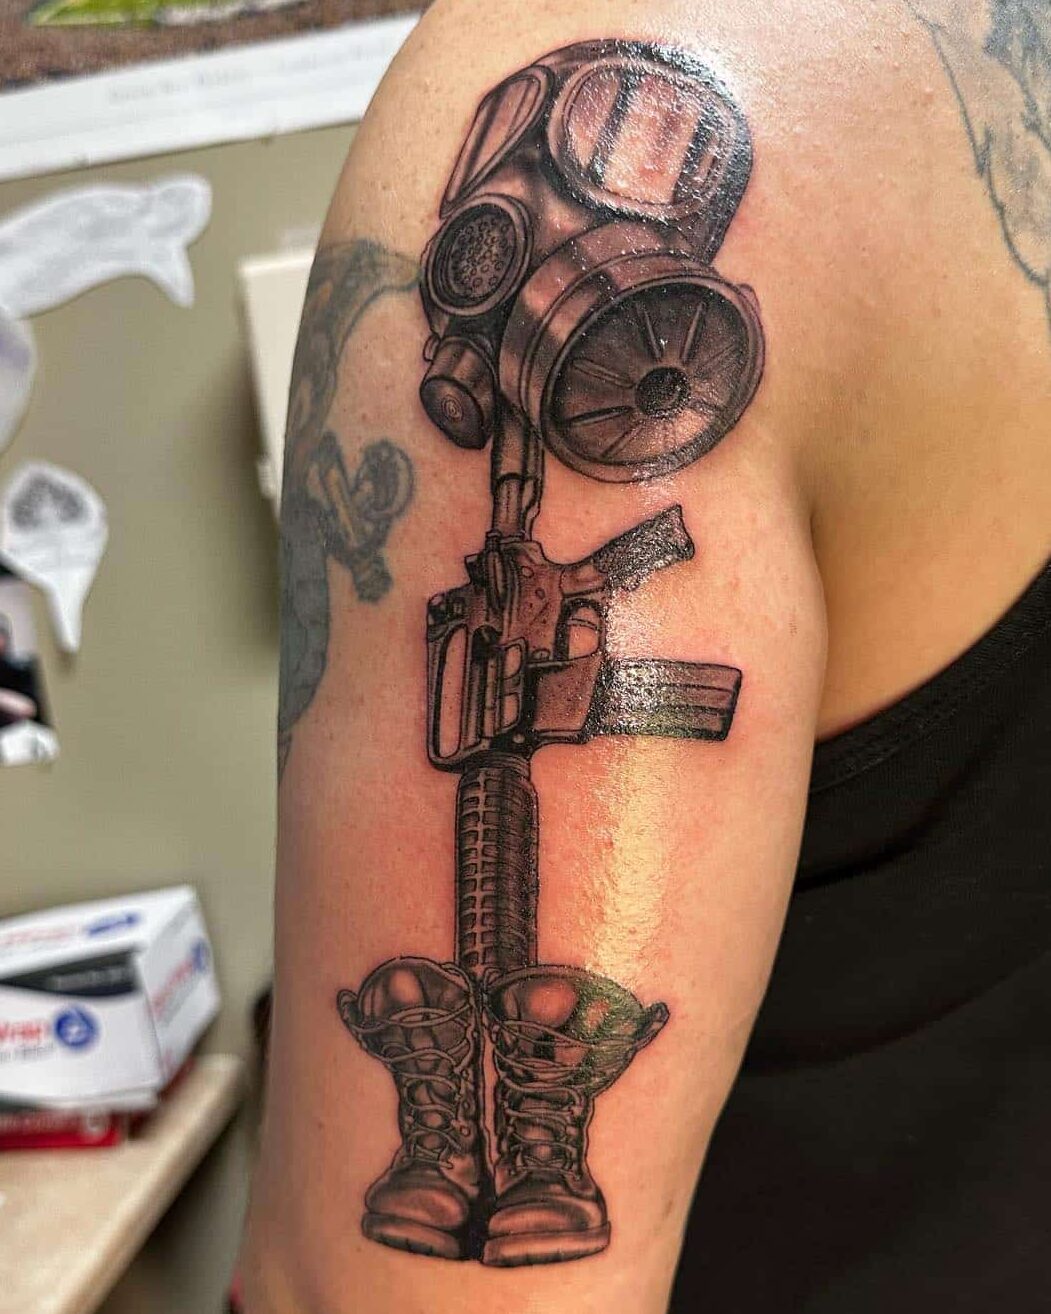 A tattoo for someone fallen in war